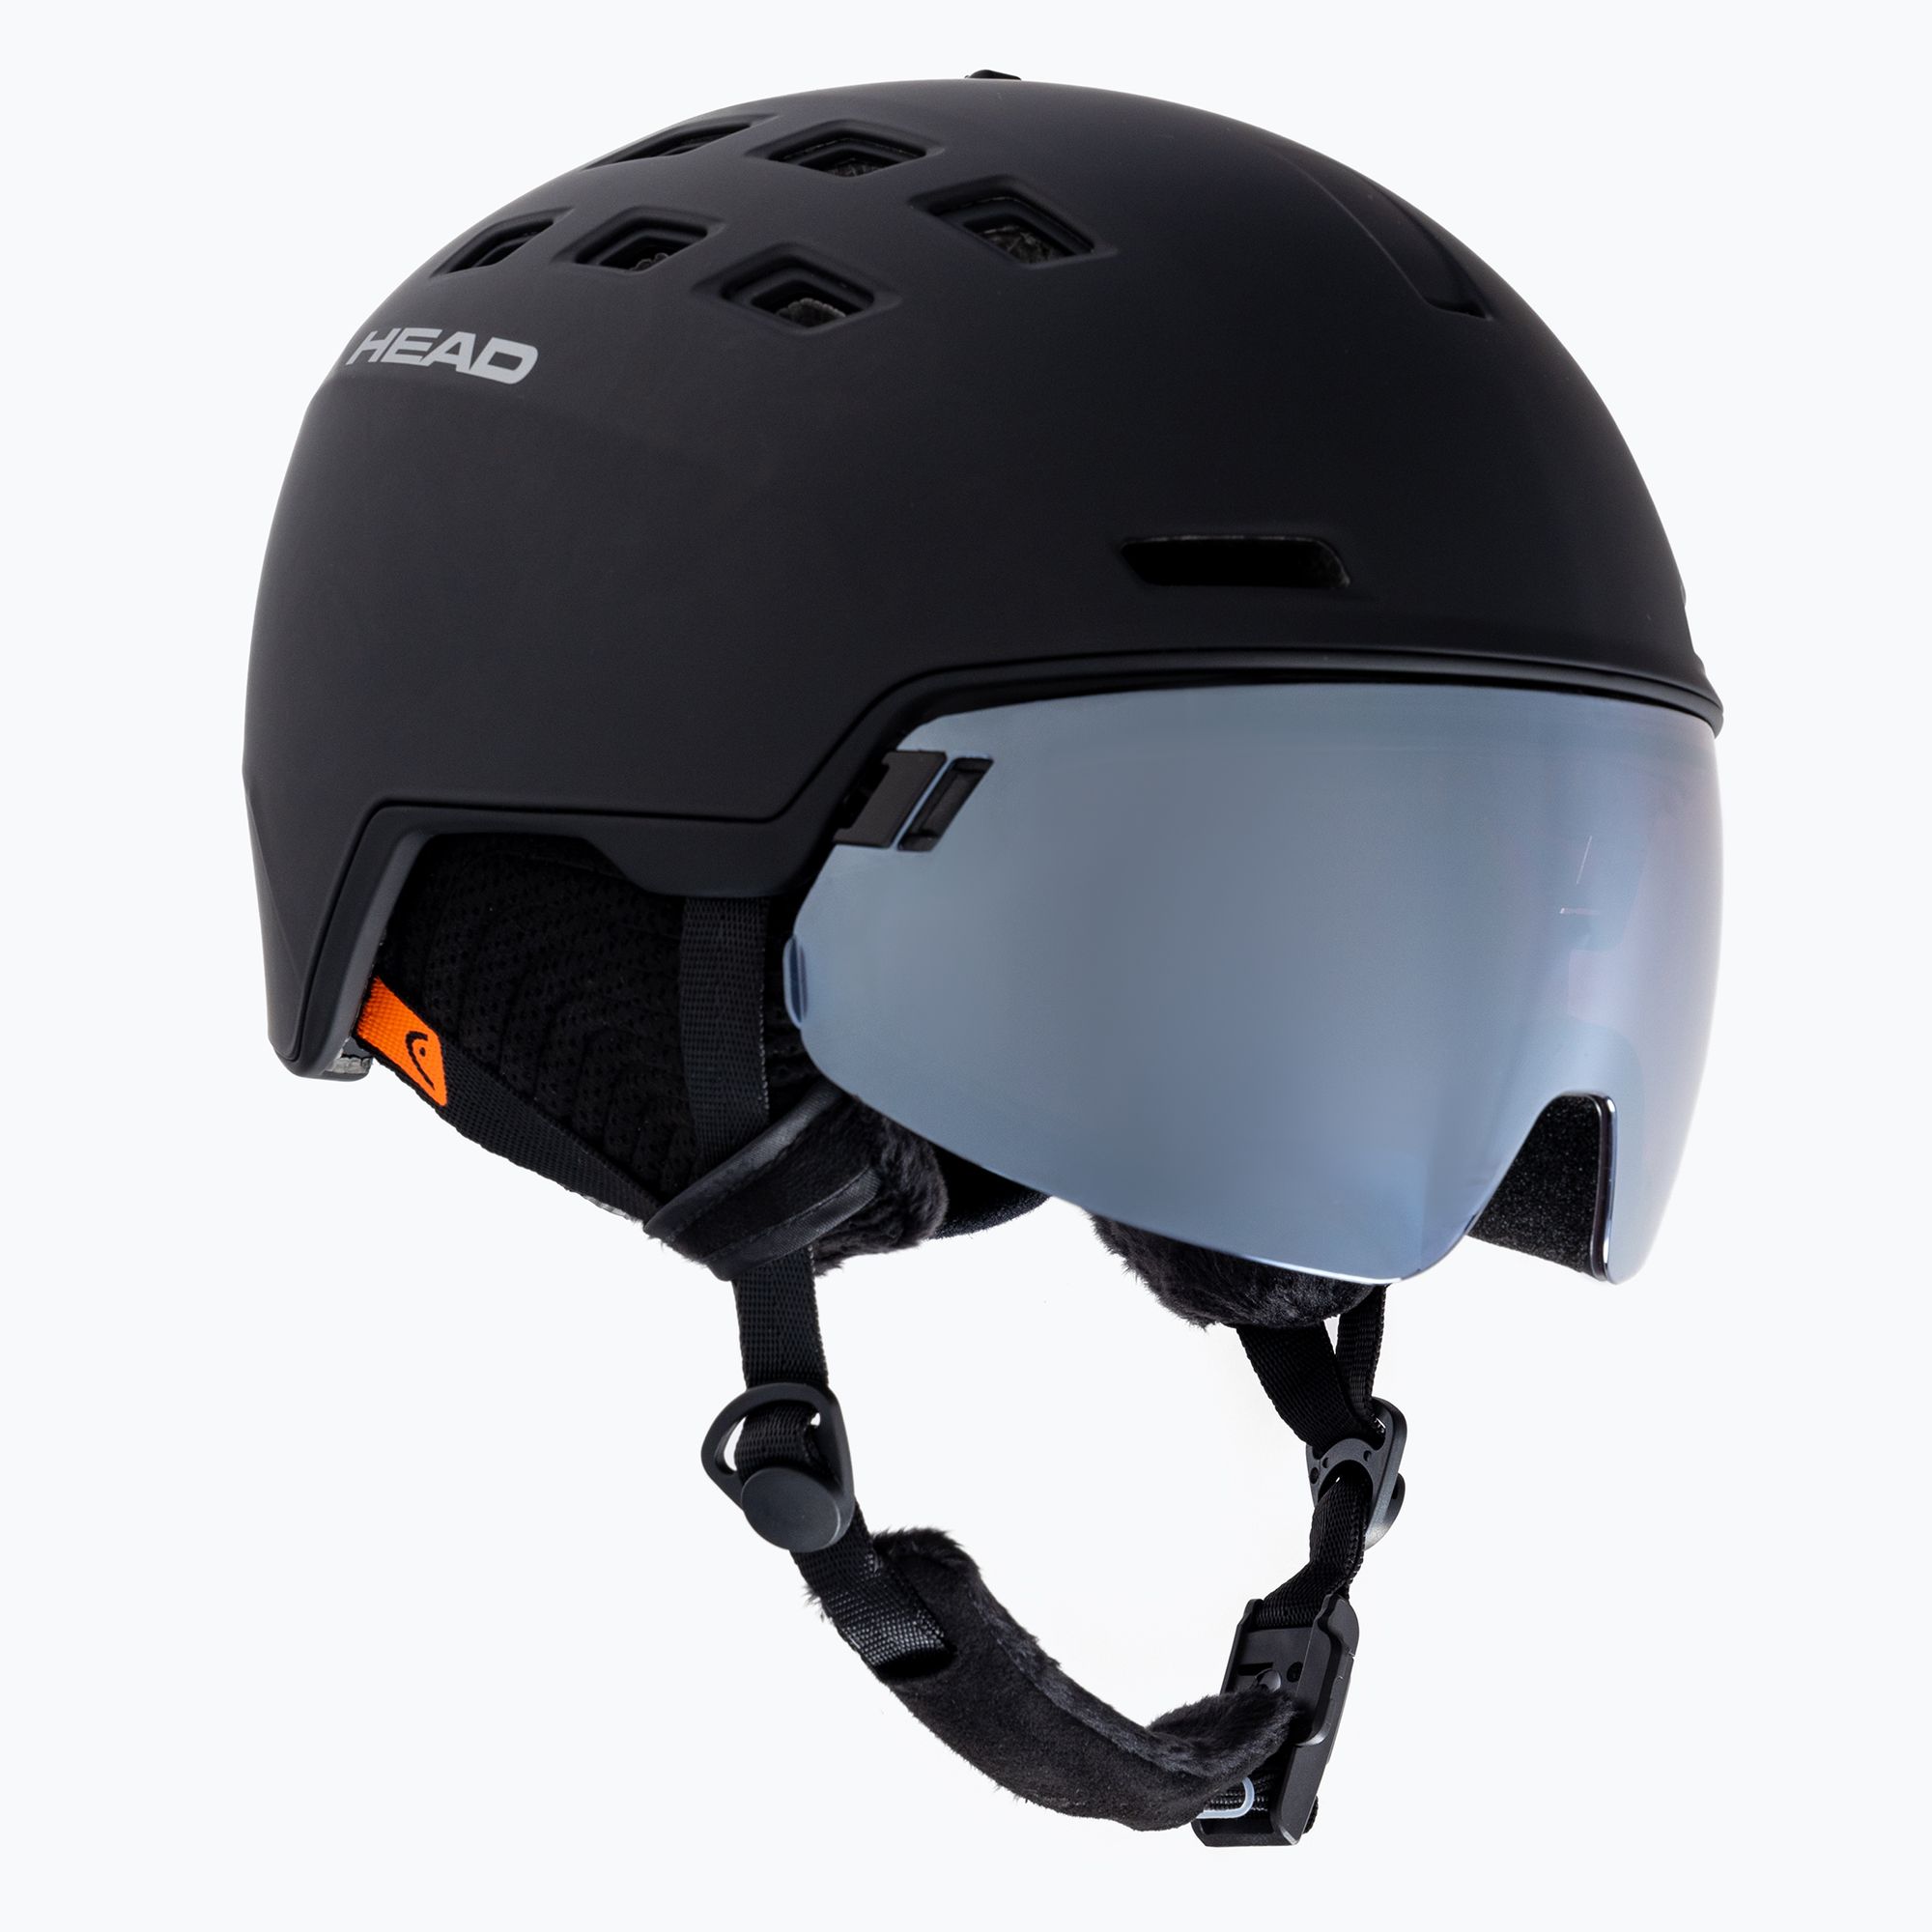 https://sportano.com/img/986c30c27a3d26a3ee16c136f92f4ff5/2/0/2000002438_20-jpg/men-s-ski-helmet-head-radar-5k-black-323211-0.jpg